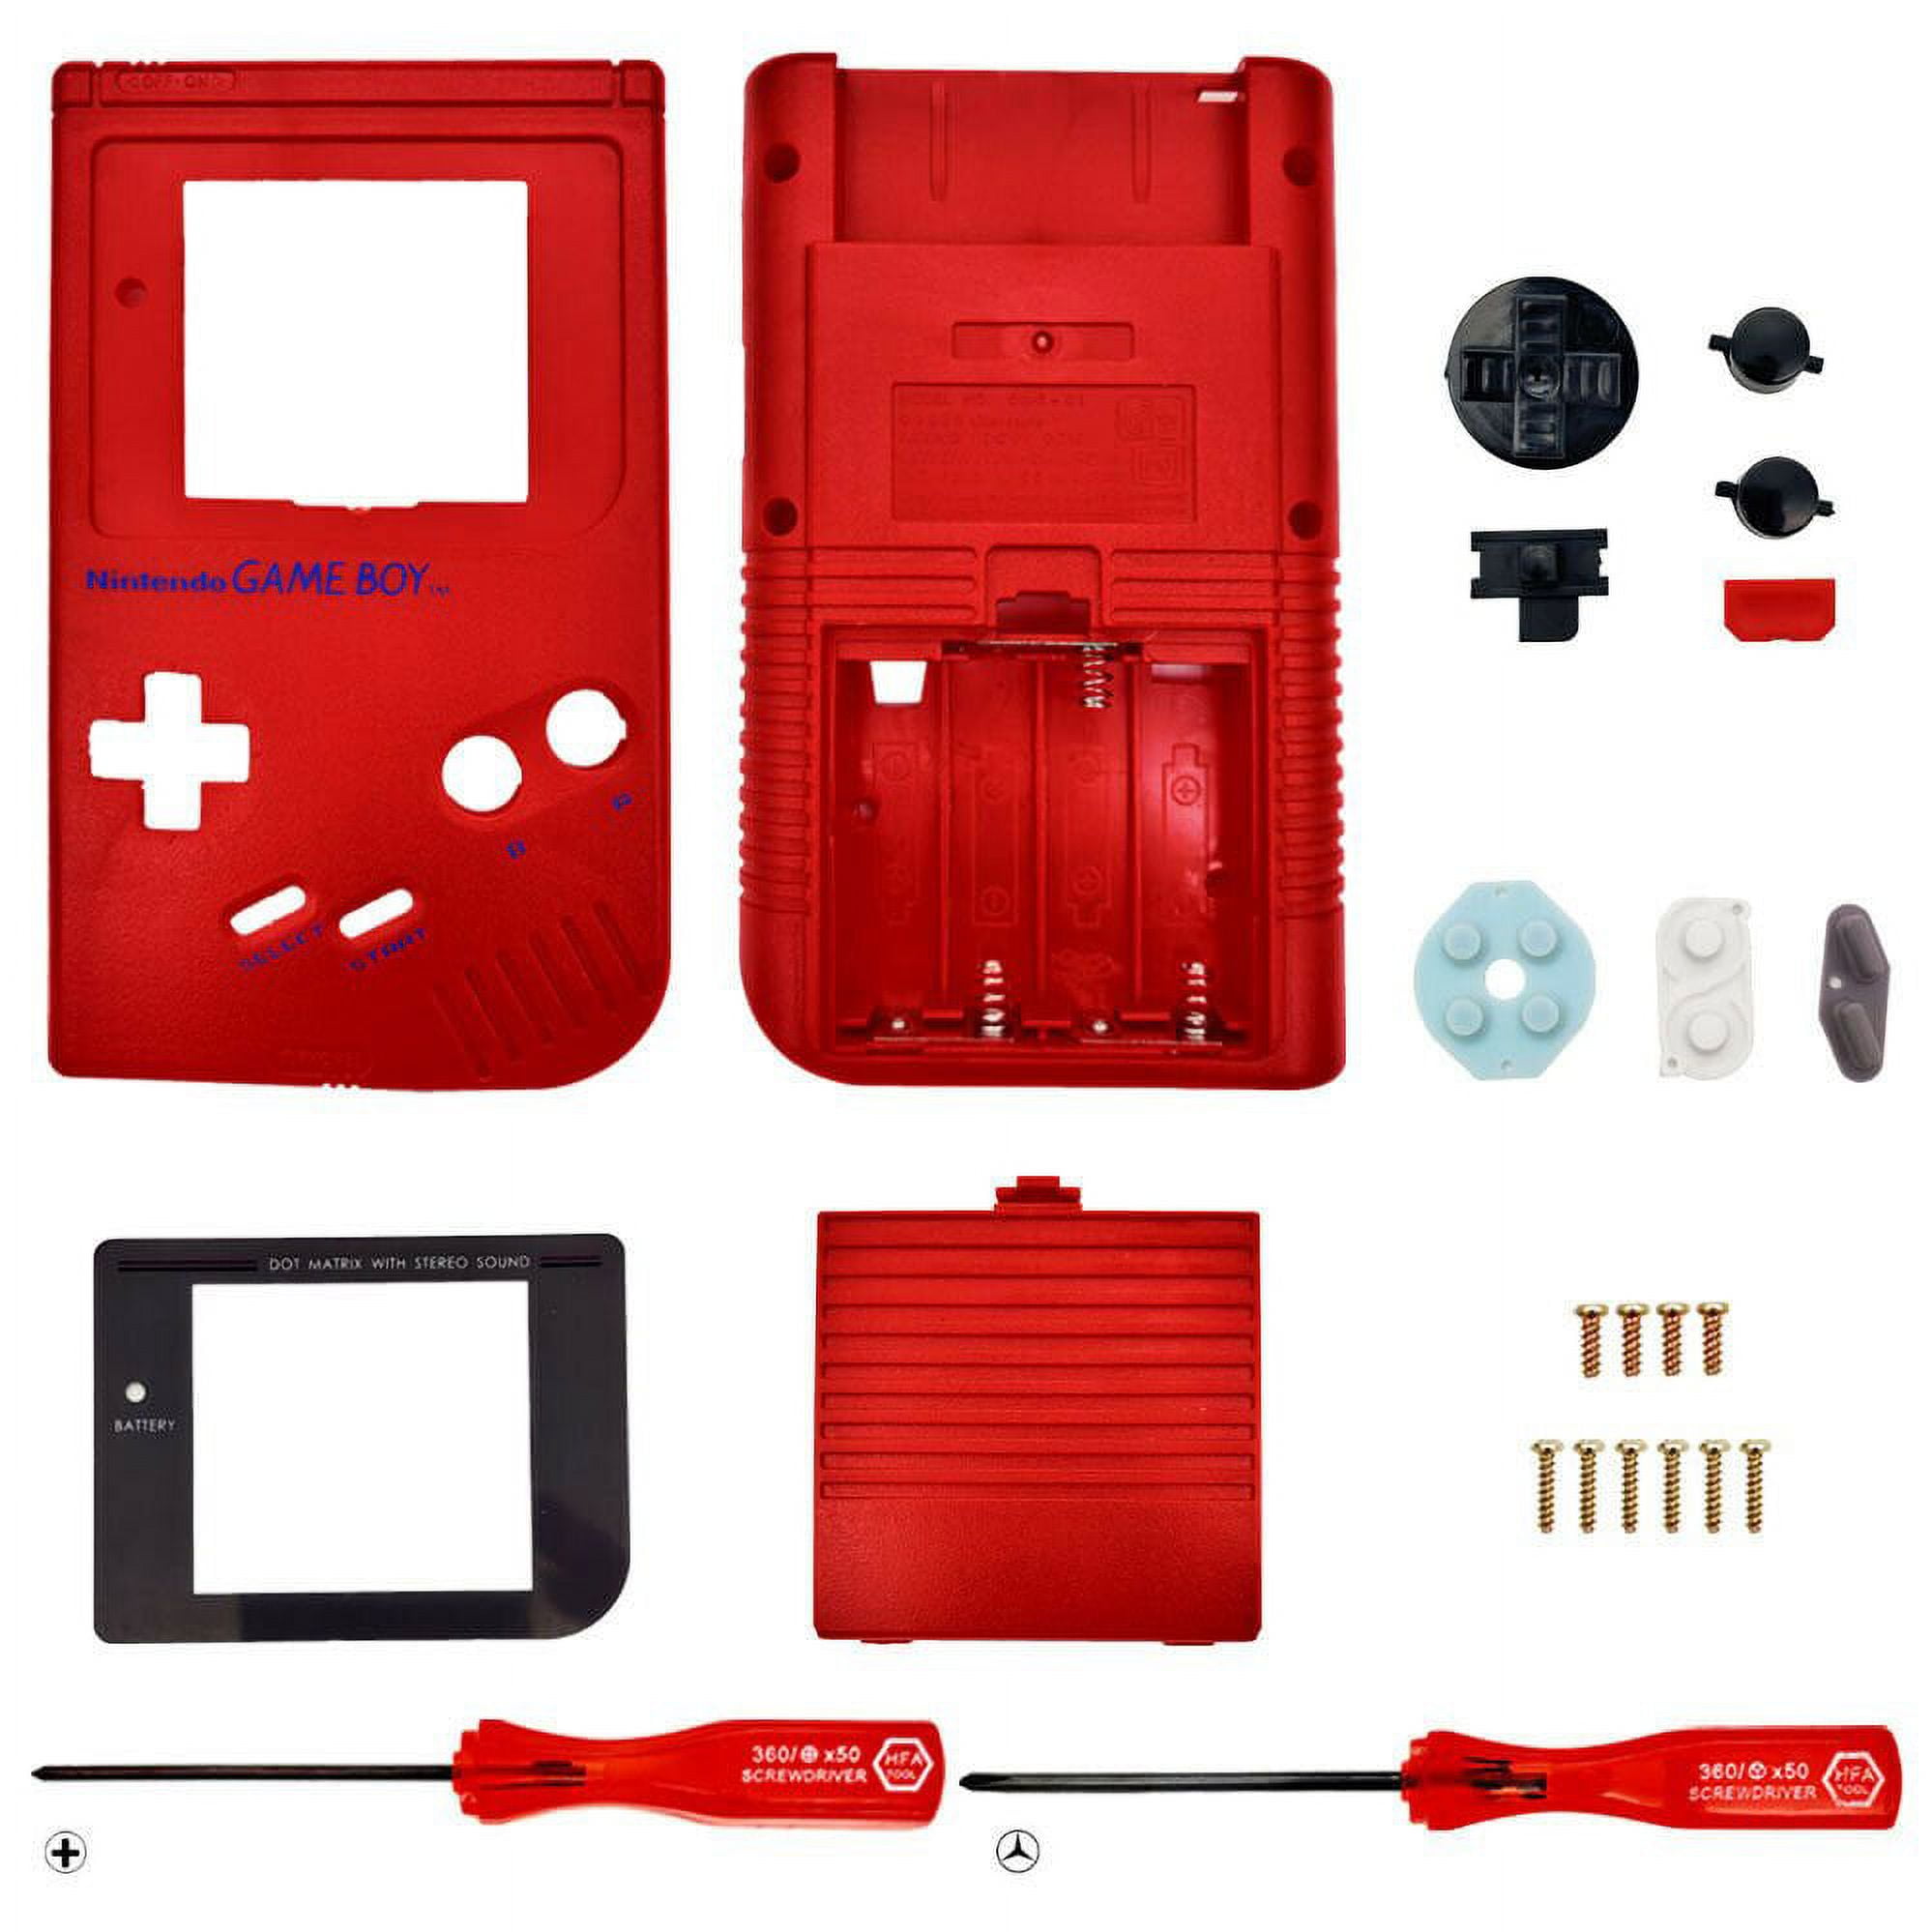 Replacement Housing for Original Nintendo GB Game Boy Shell DMG-01 Red